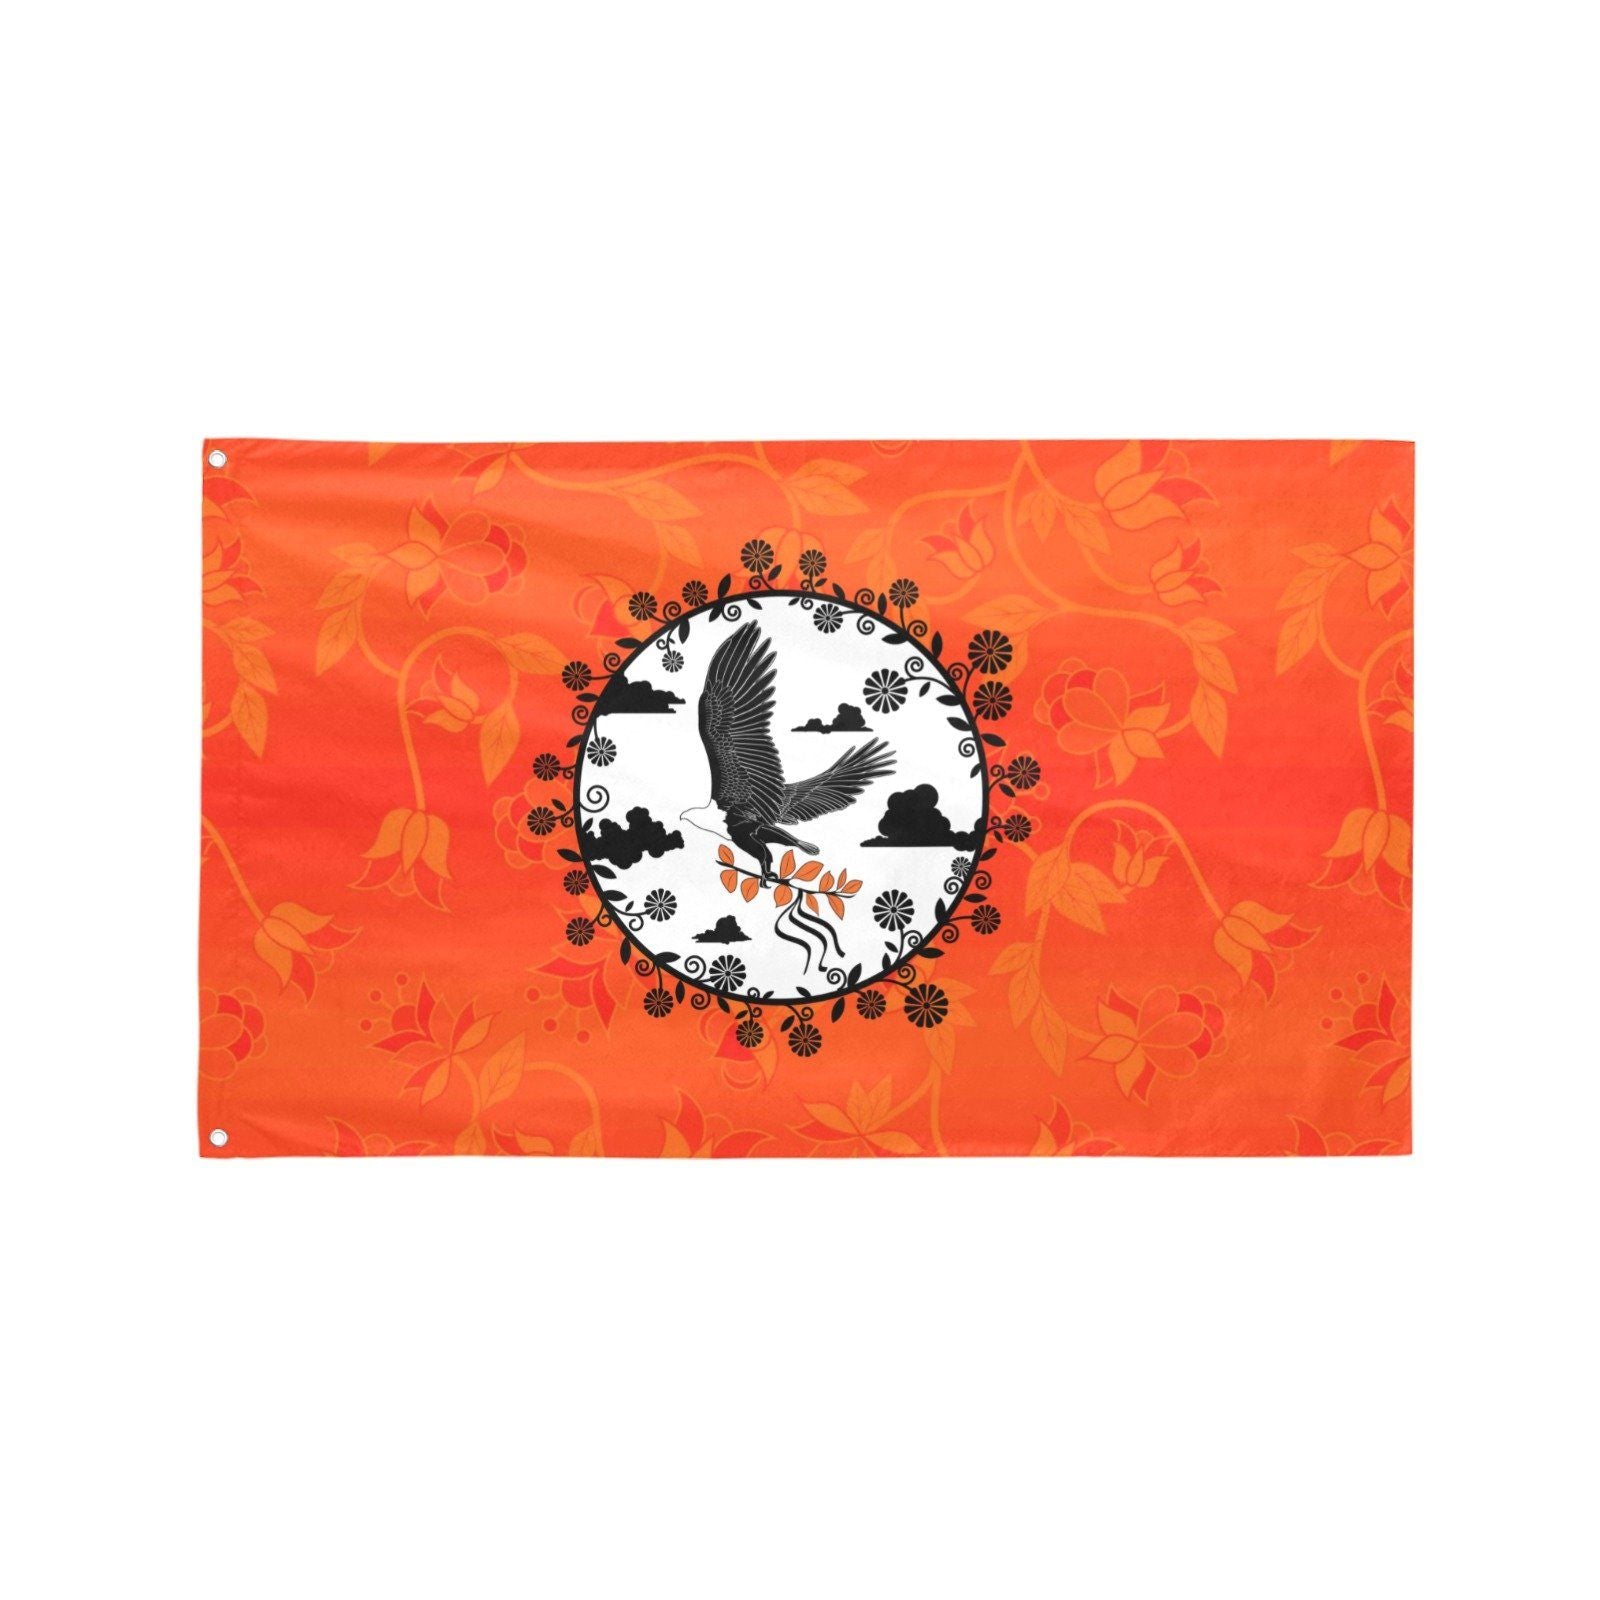 Orange Days Orange Carrying Their Prayers Garden Flag 59"x35" Garden Flag 59"x35" e-joyer 